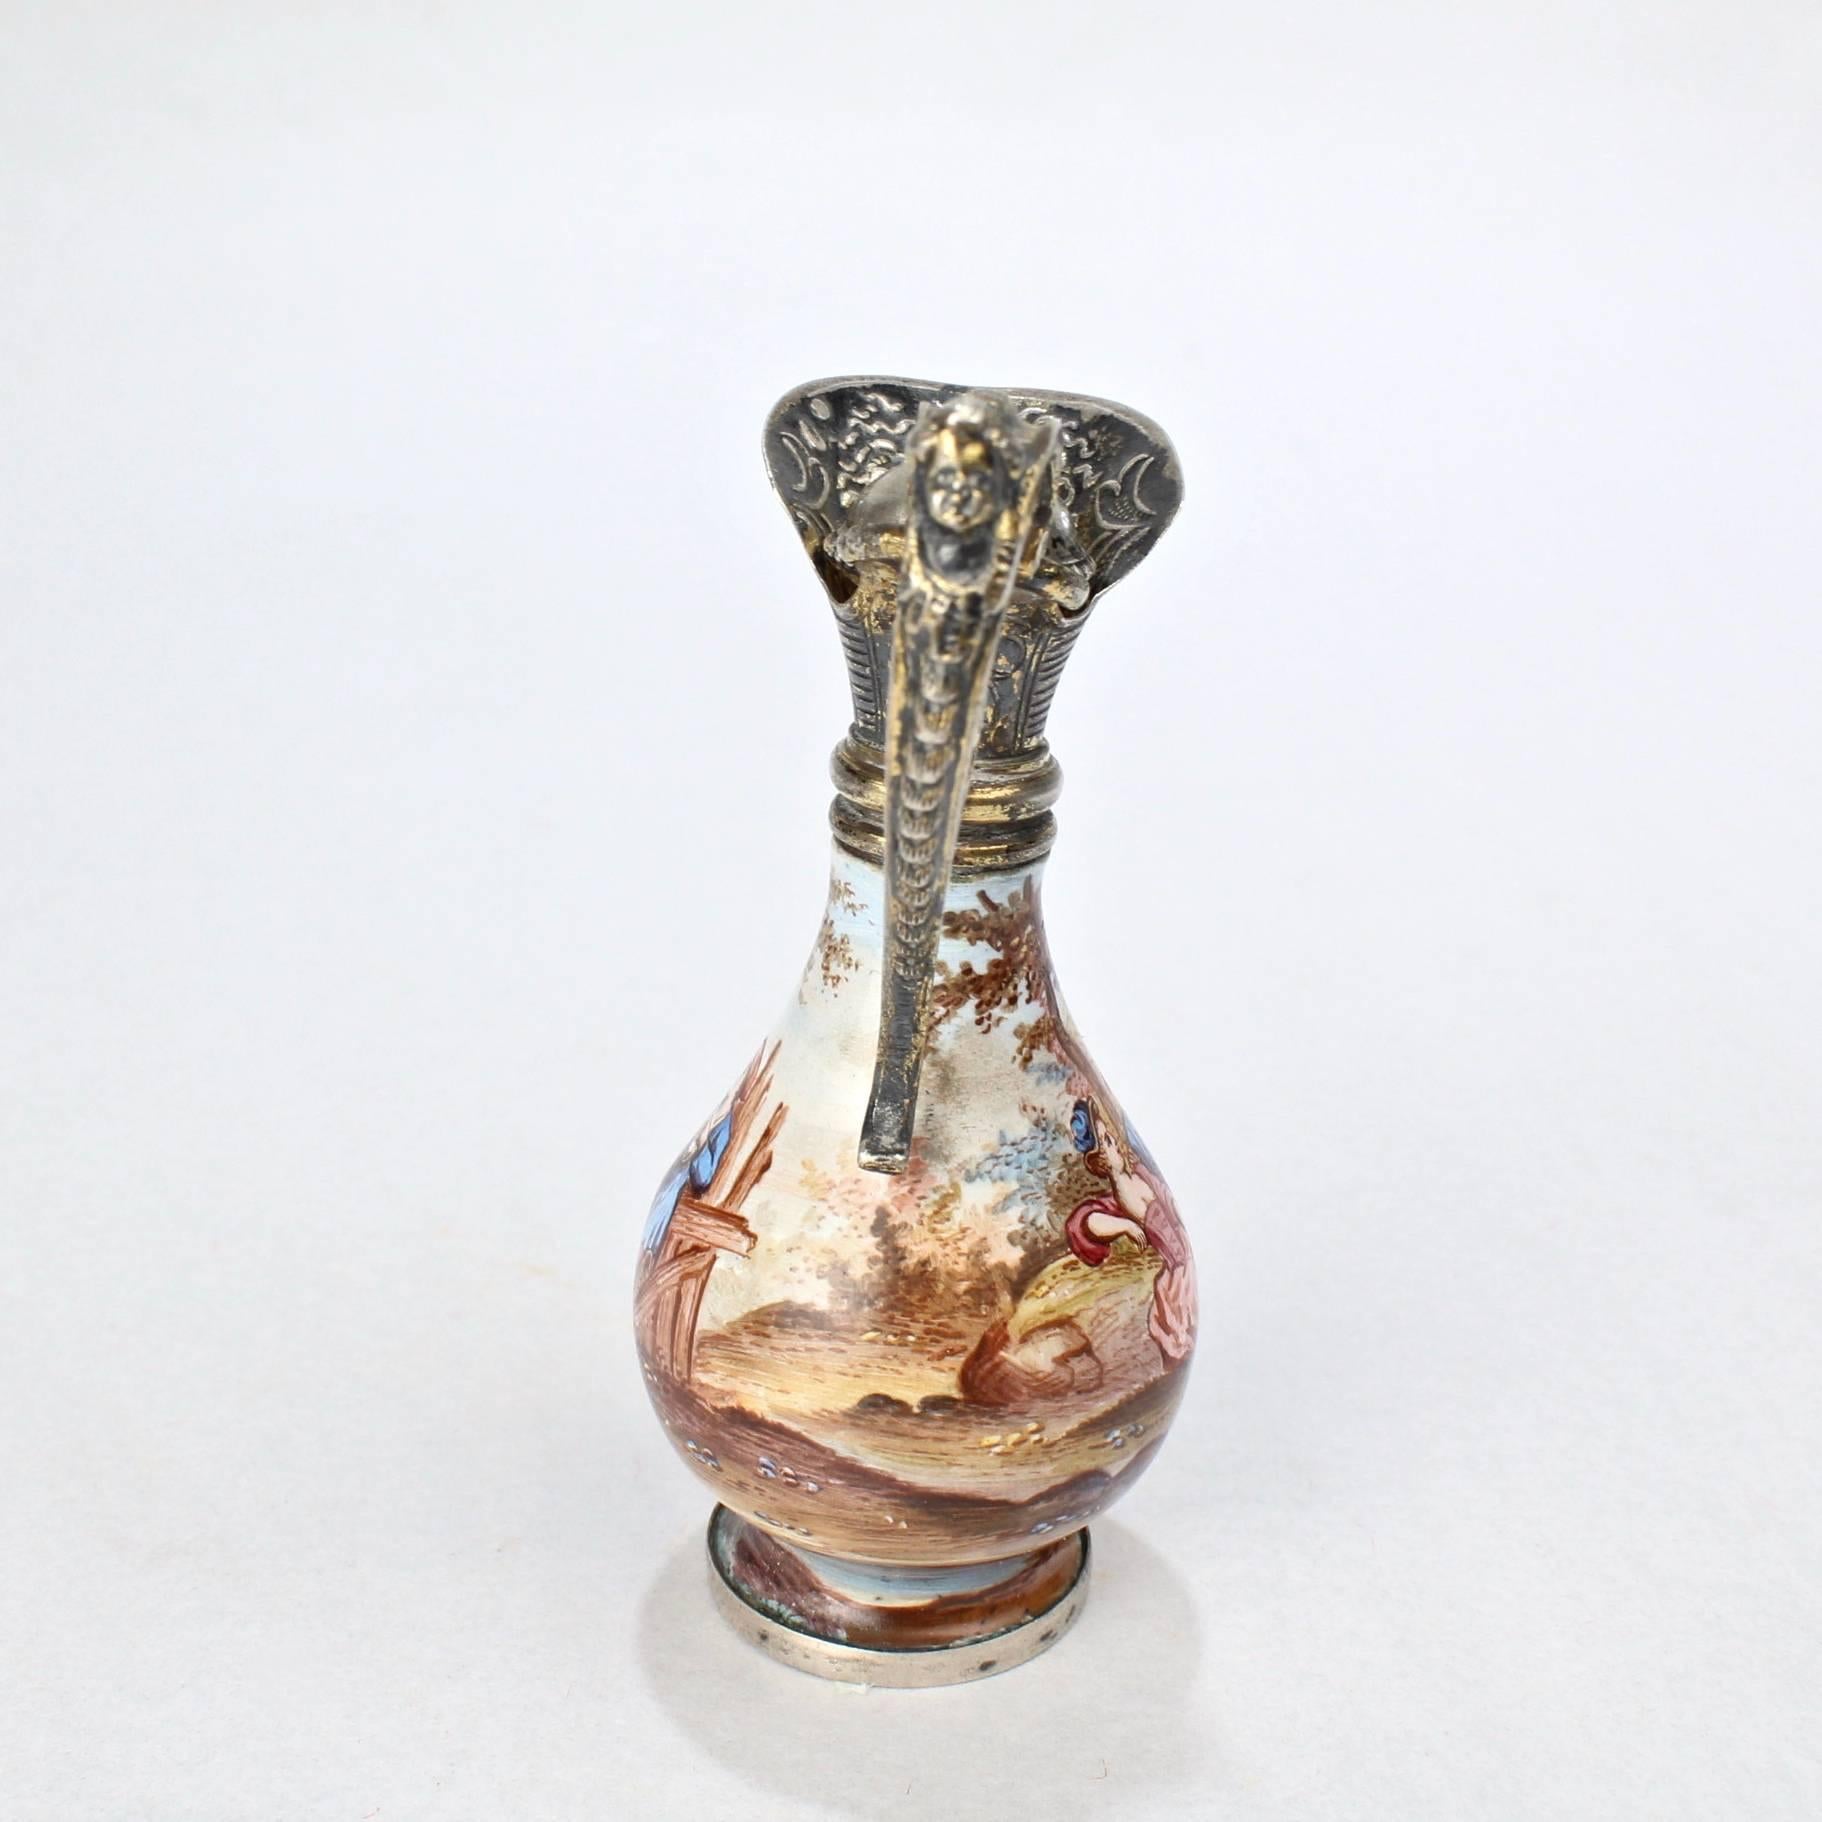 Belle Époque Signed Hermann Boehm Viennese Enamel & Silver Miniature Ewer Form Perfume Bottle